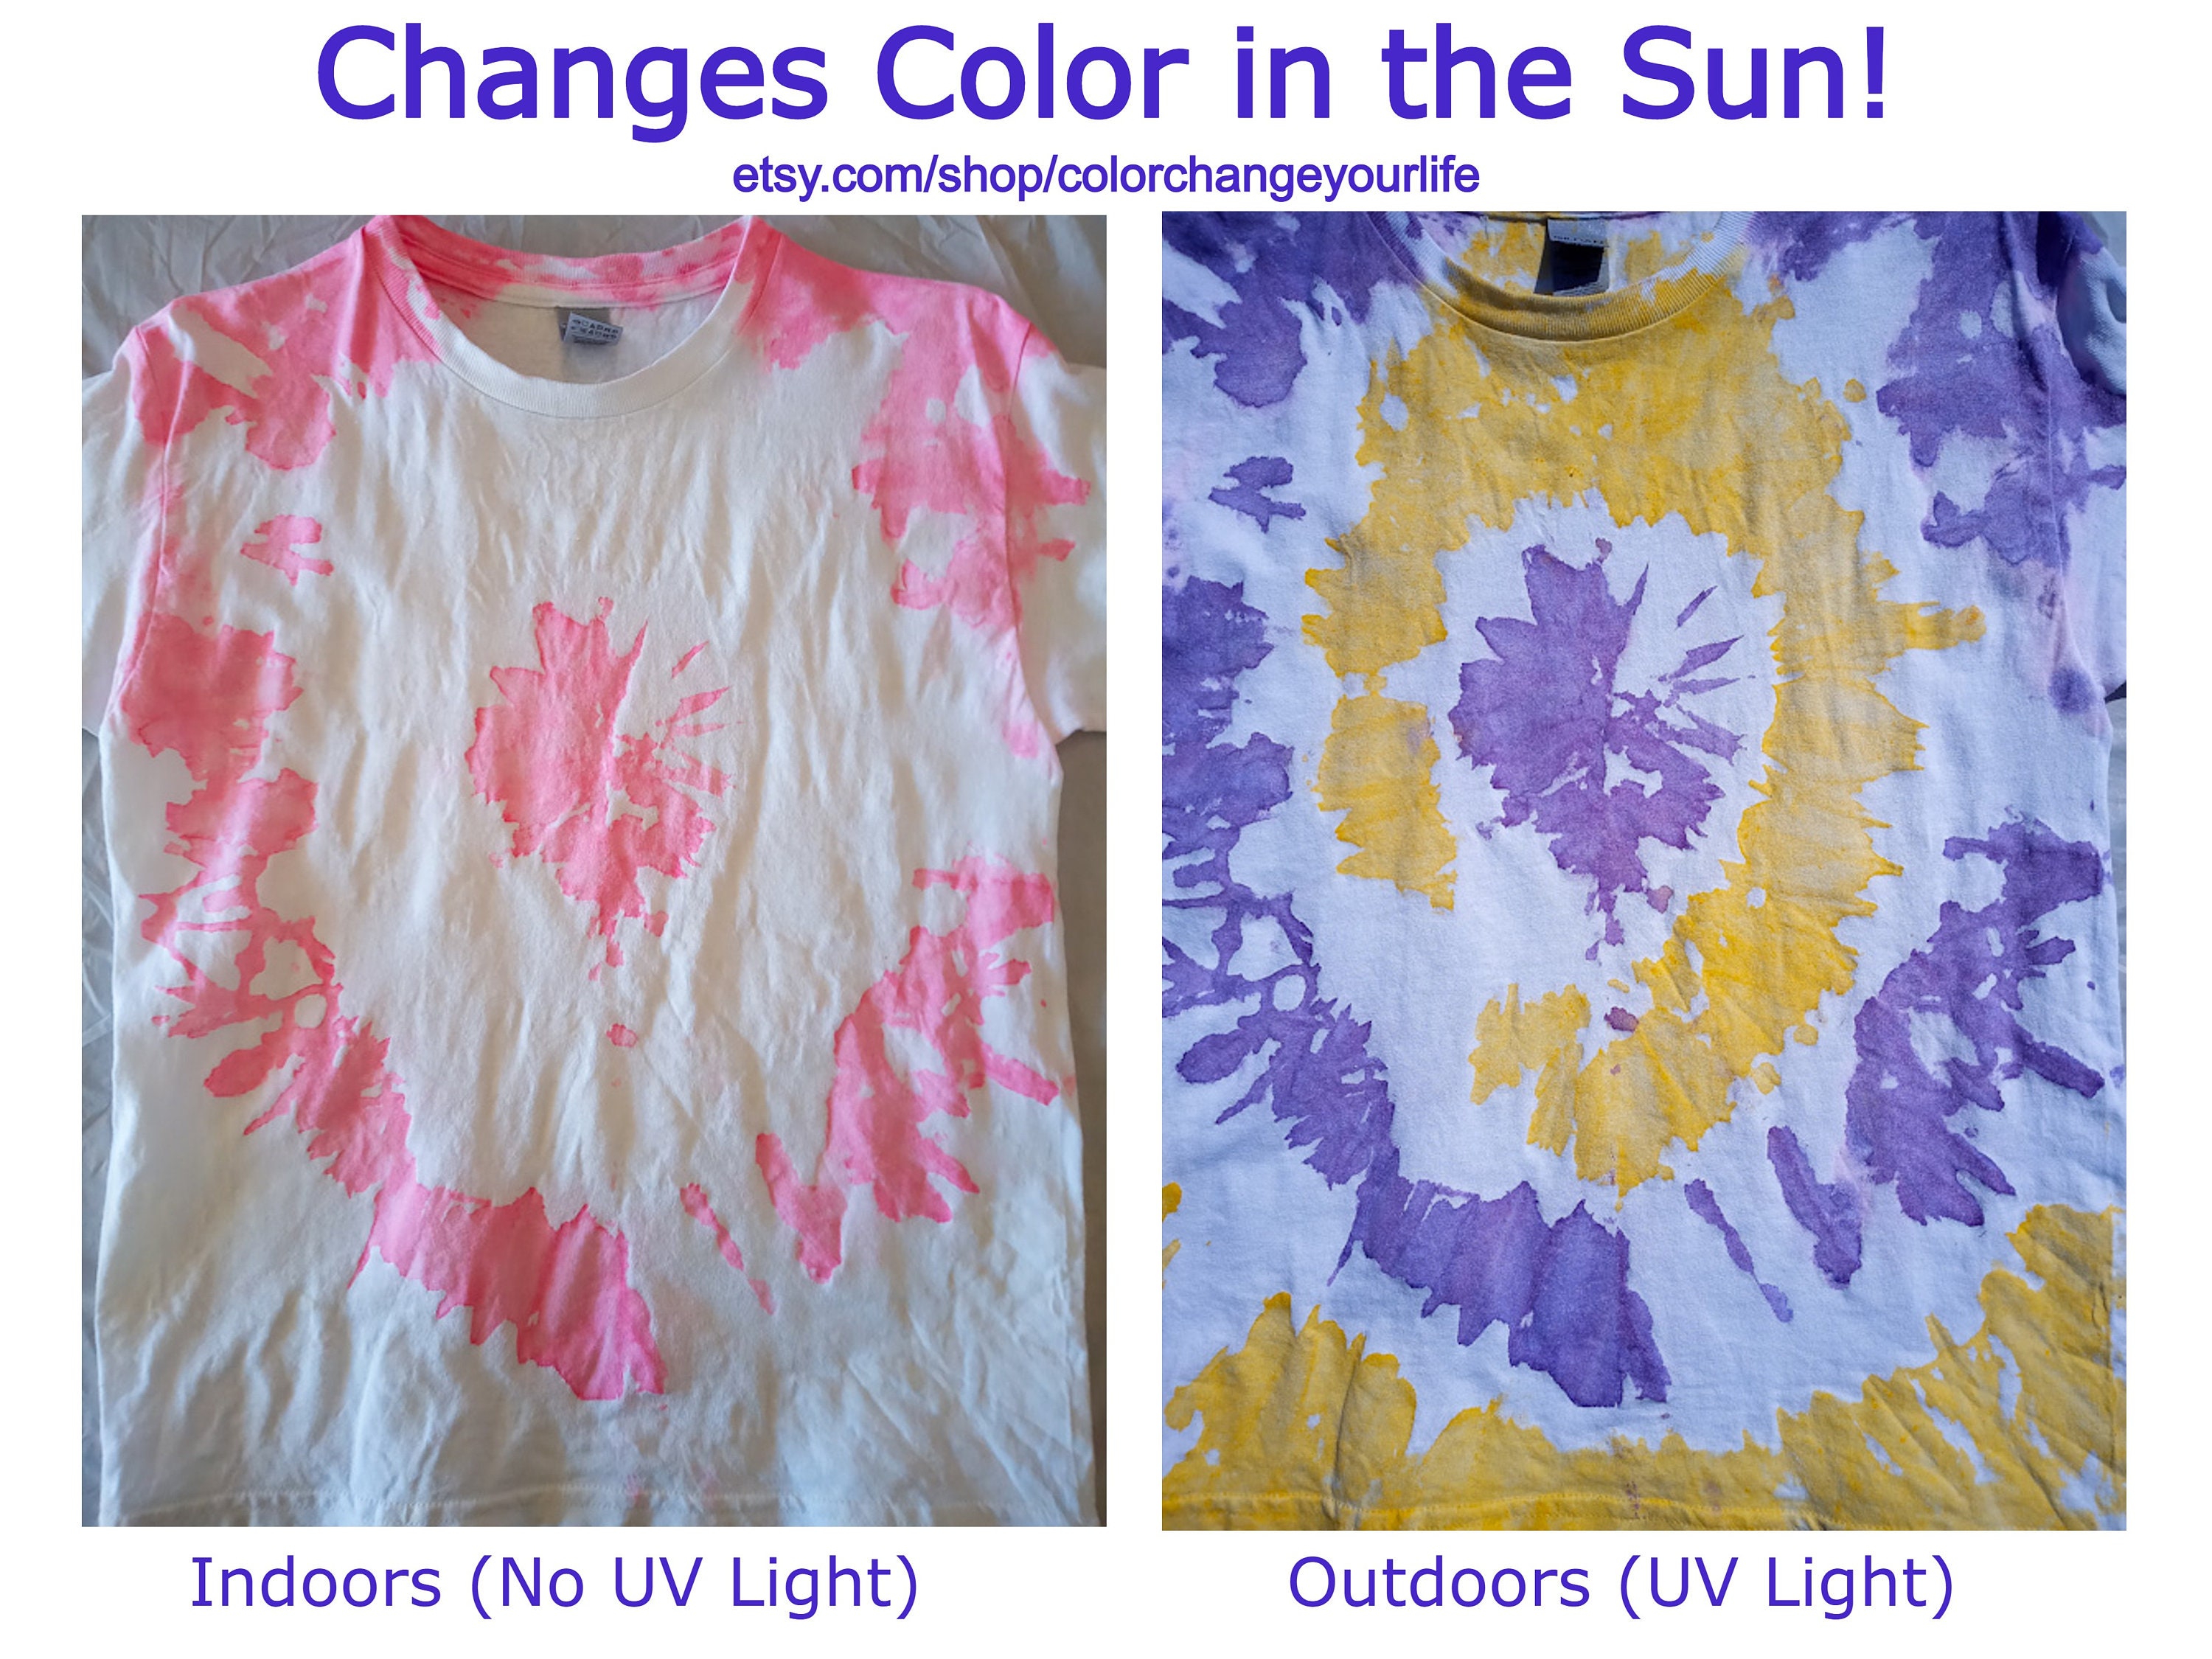 Hue Chromic® Solar Fabric Dye - Pink to Blue